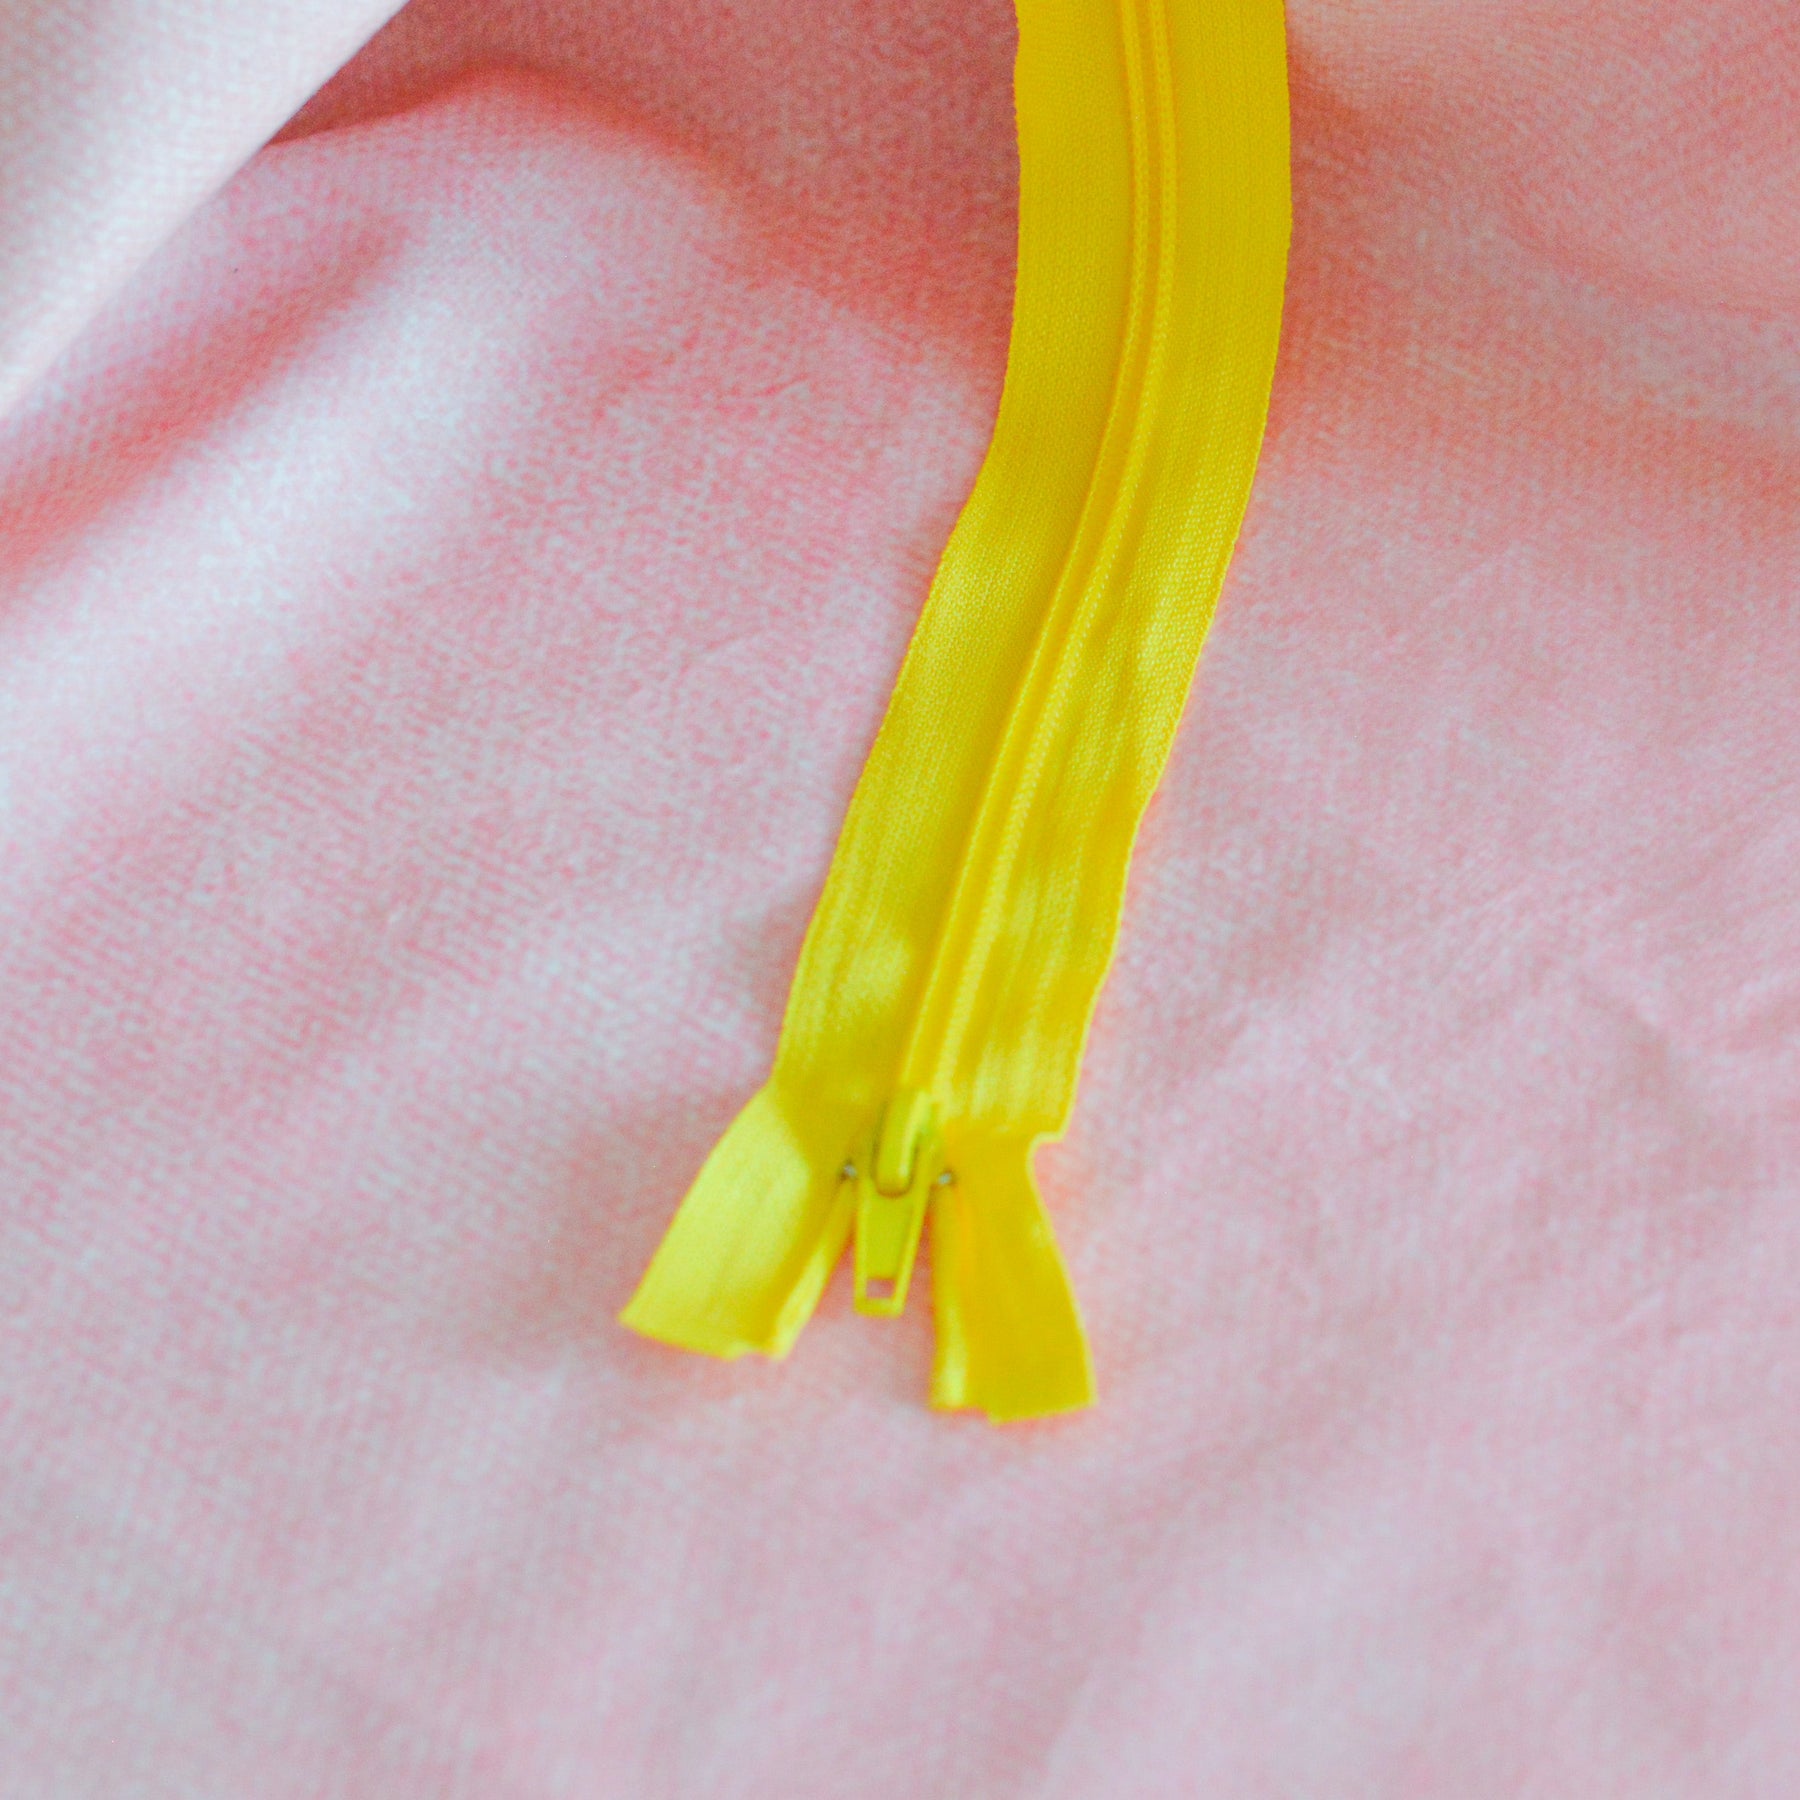 Jacken Reißverschluss 70 cm Zitronen gelb Stück poshpinks